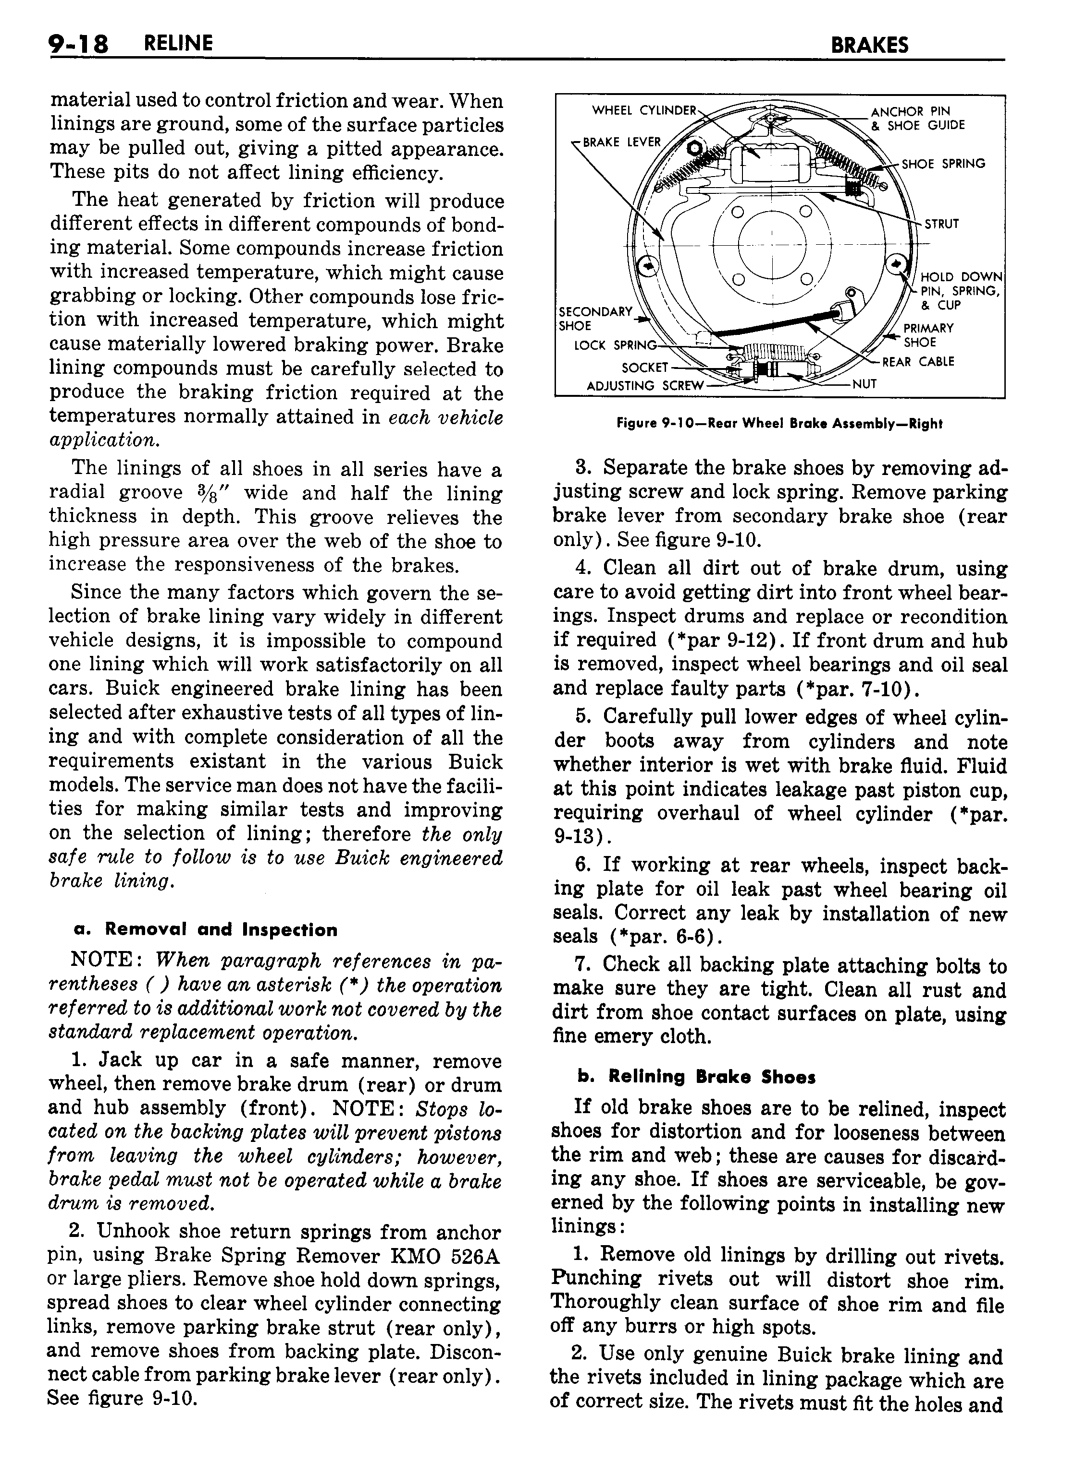 n_10 1957 Buick Shop Manual - Brakes-018-018.jpg